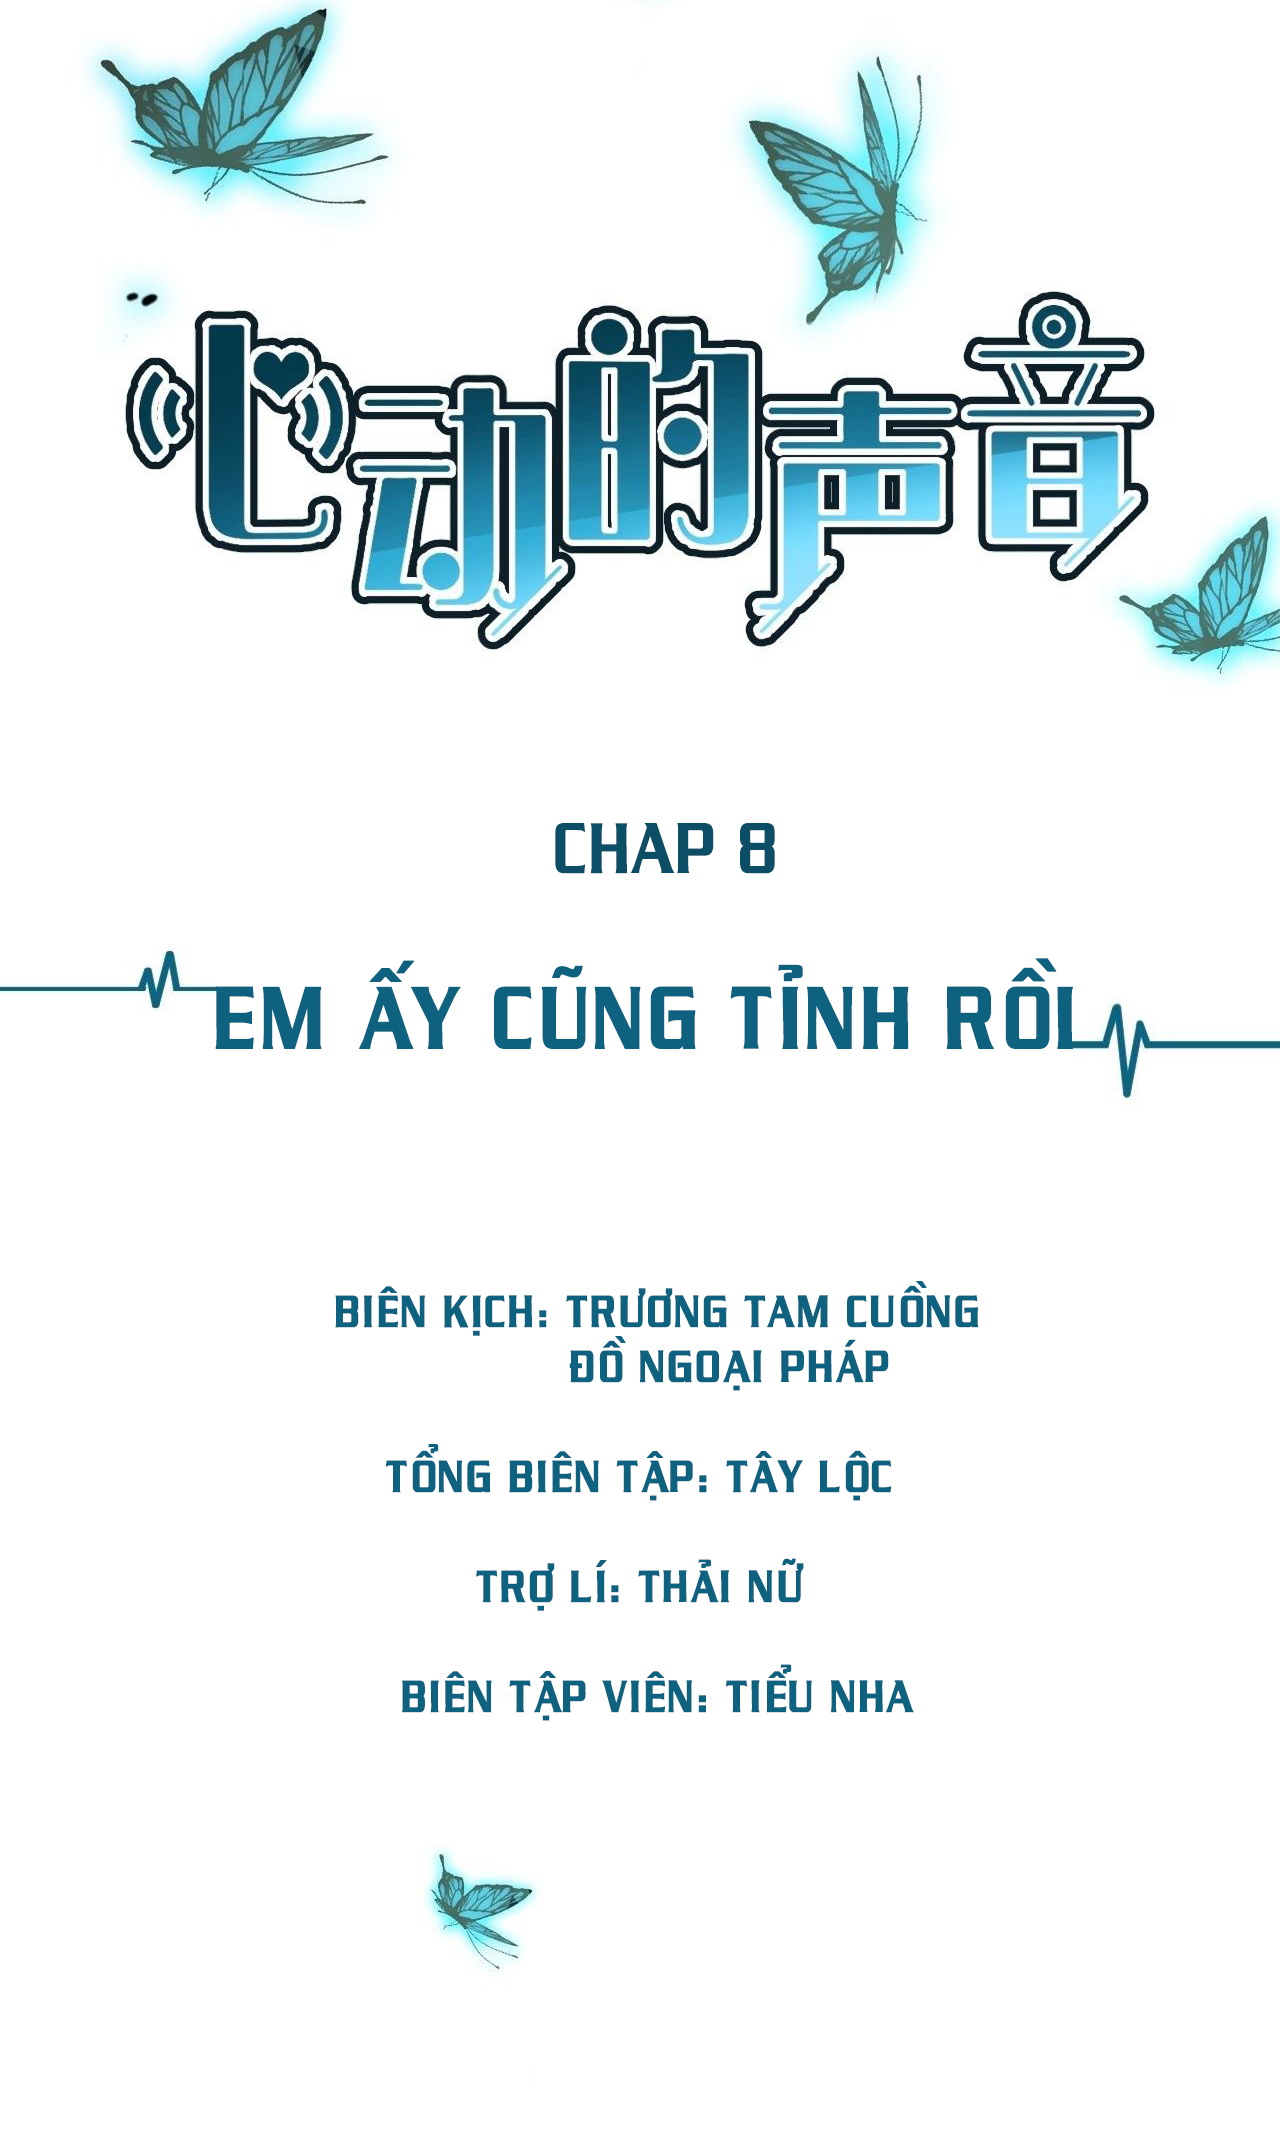 am-thanh-rung-dong-chap-8-1